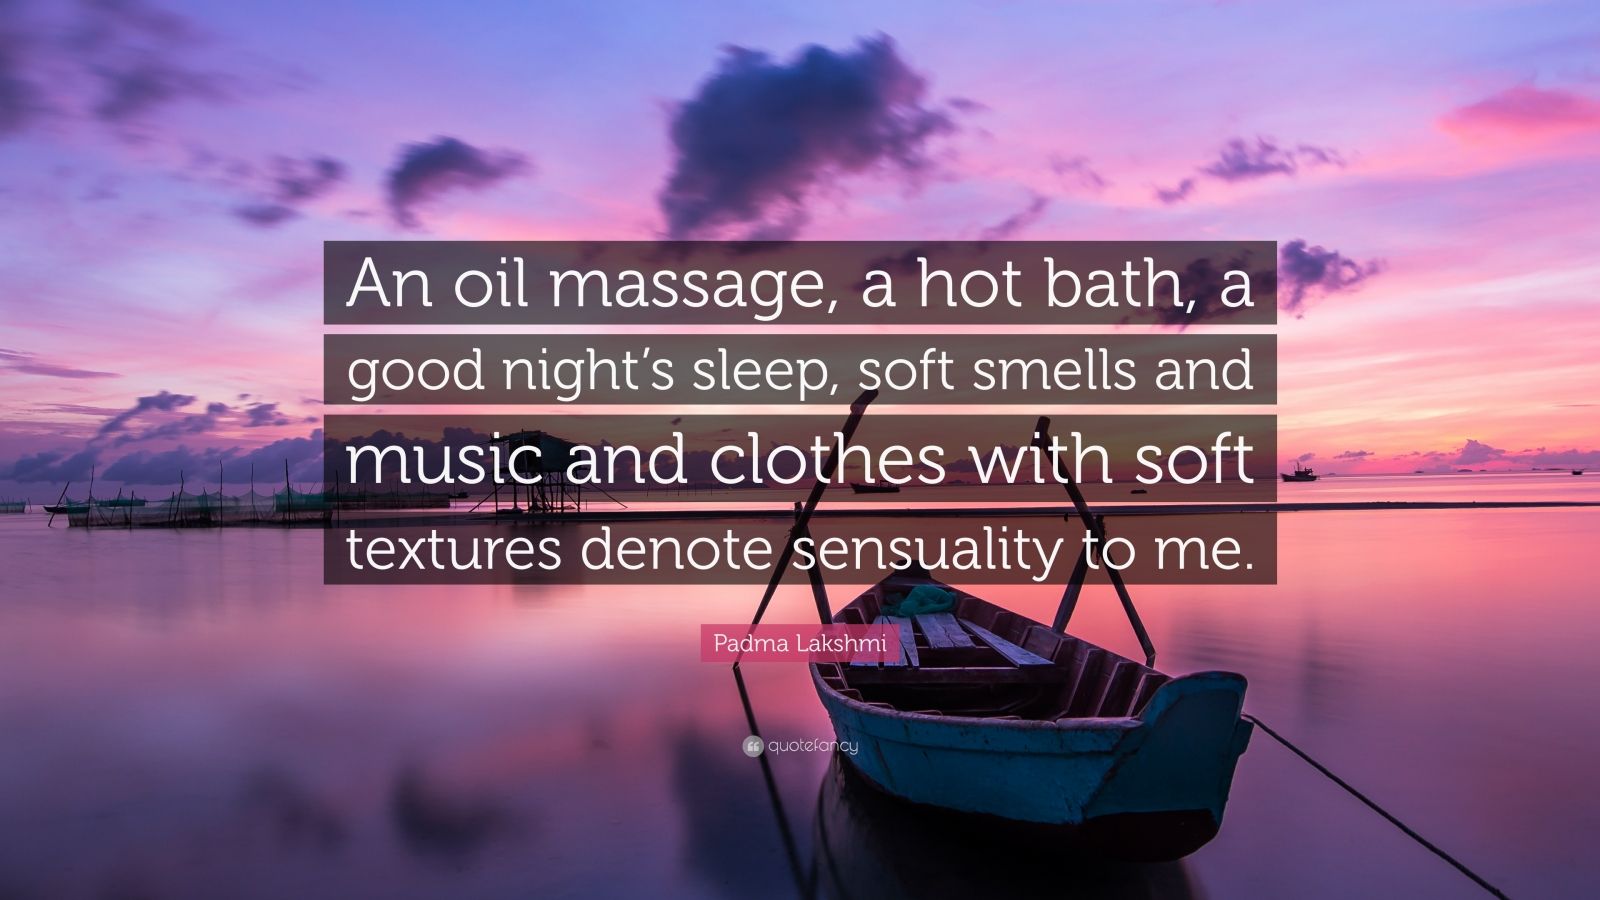 Padma Lakshmi Quote: “An oil massage, a hot bath, a good night’s sleep